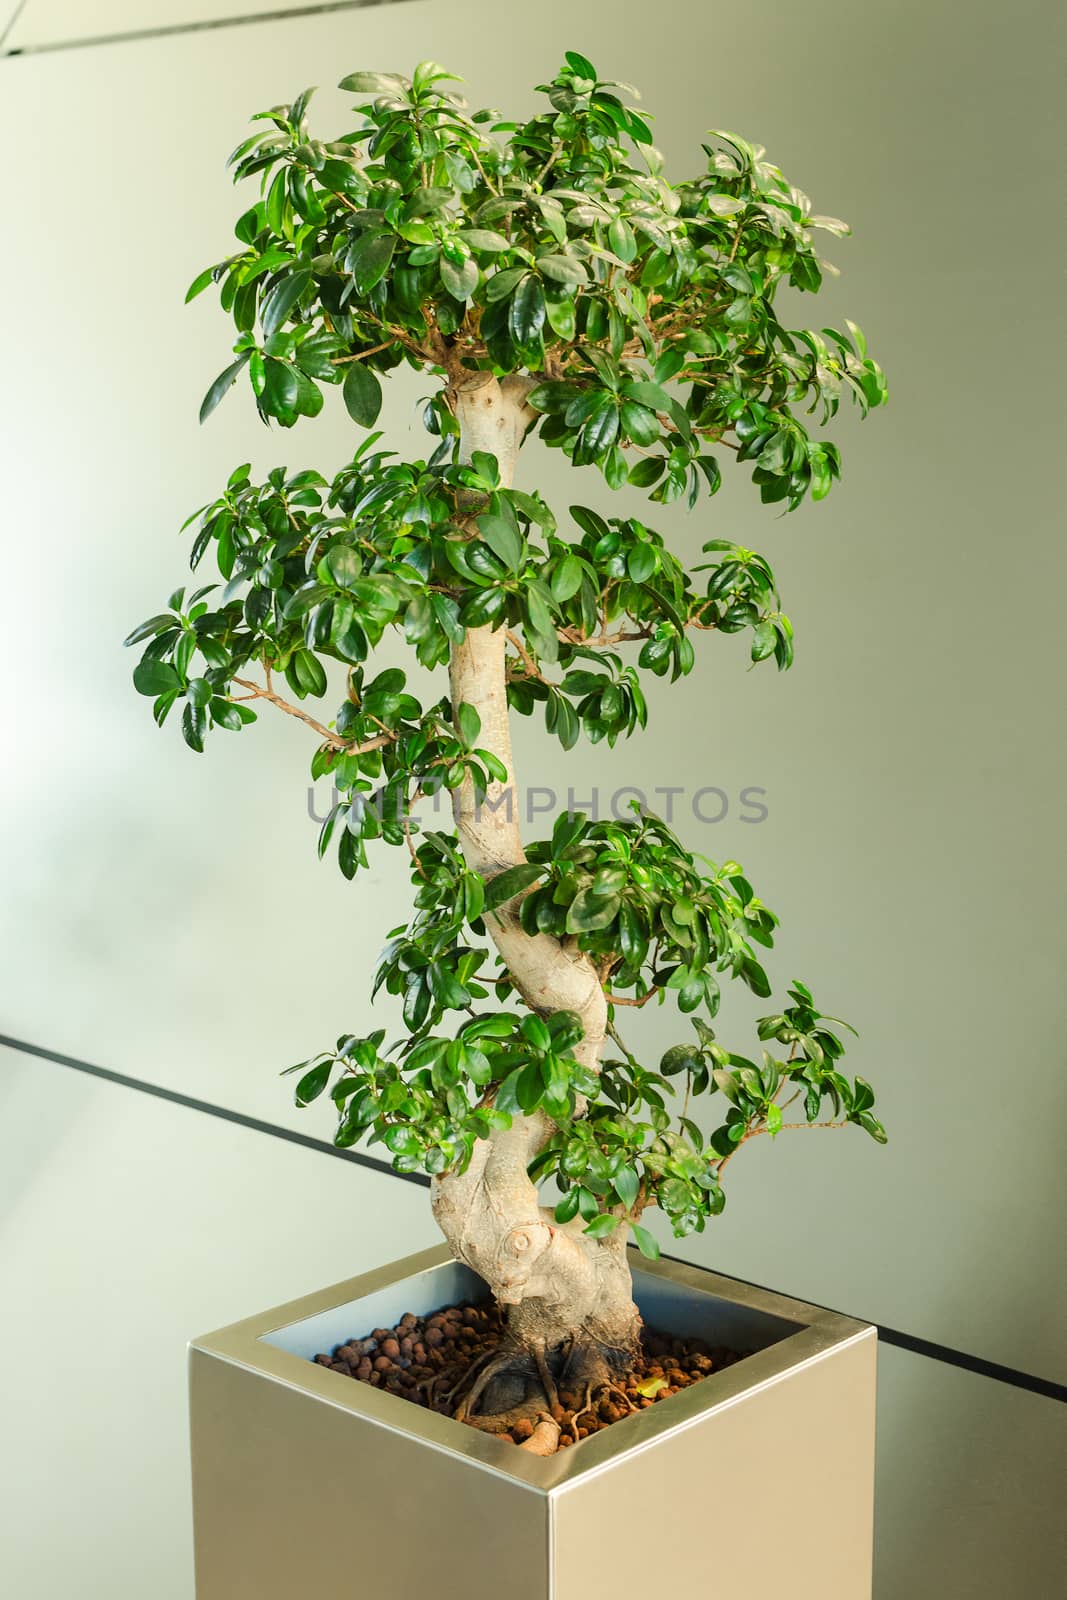 Miniature ficus tree - bonsai Japanese traditional art in interior of modern office